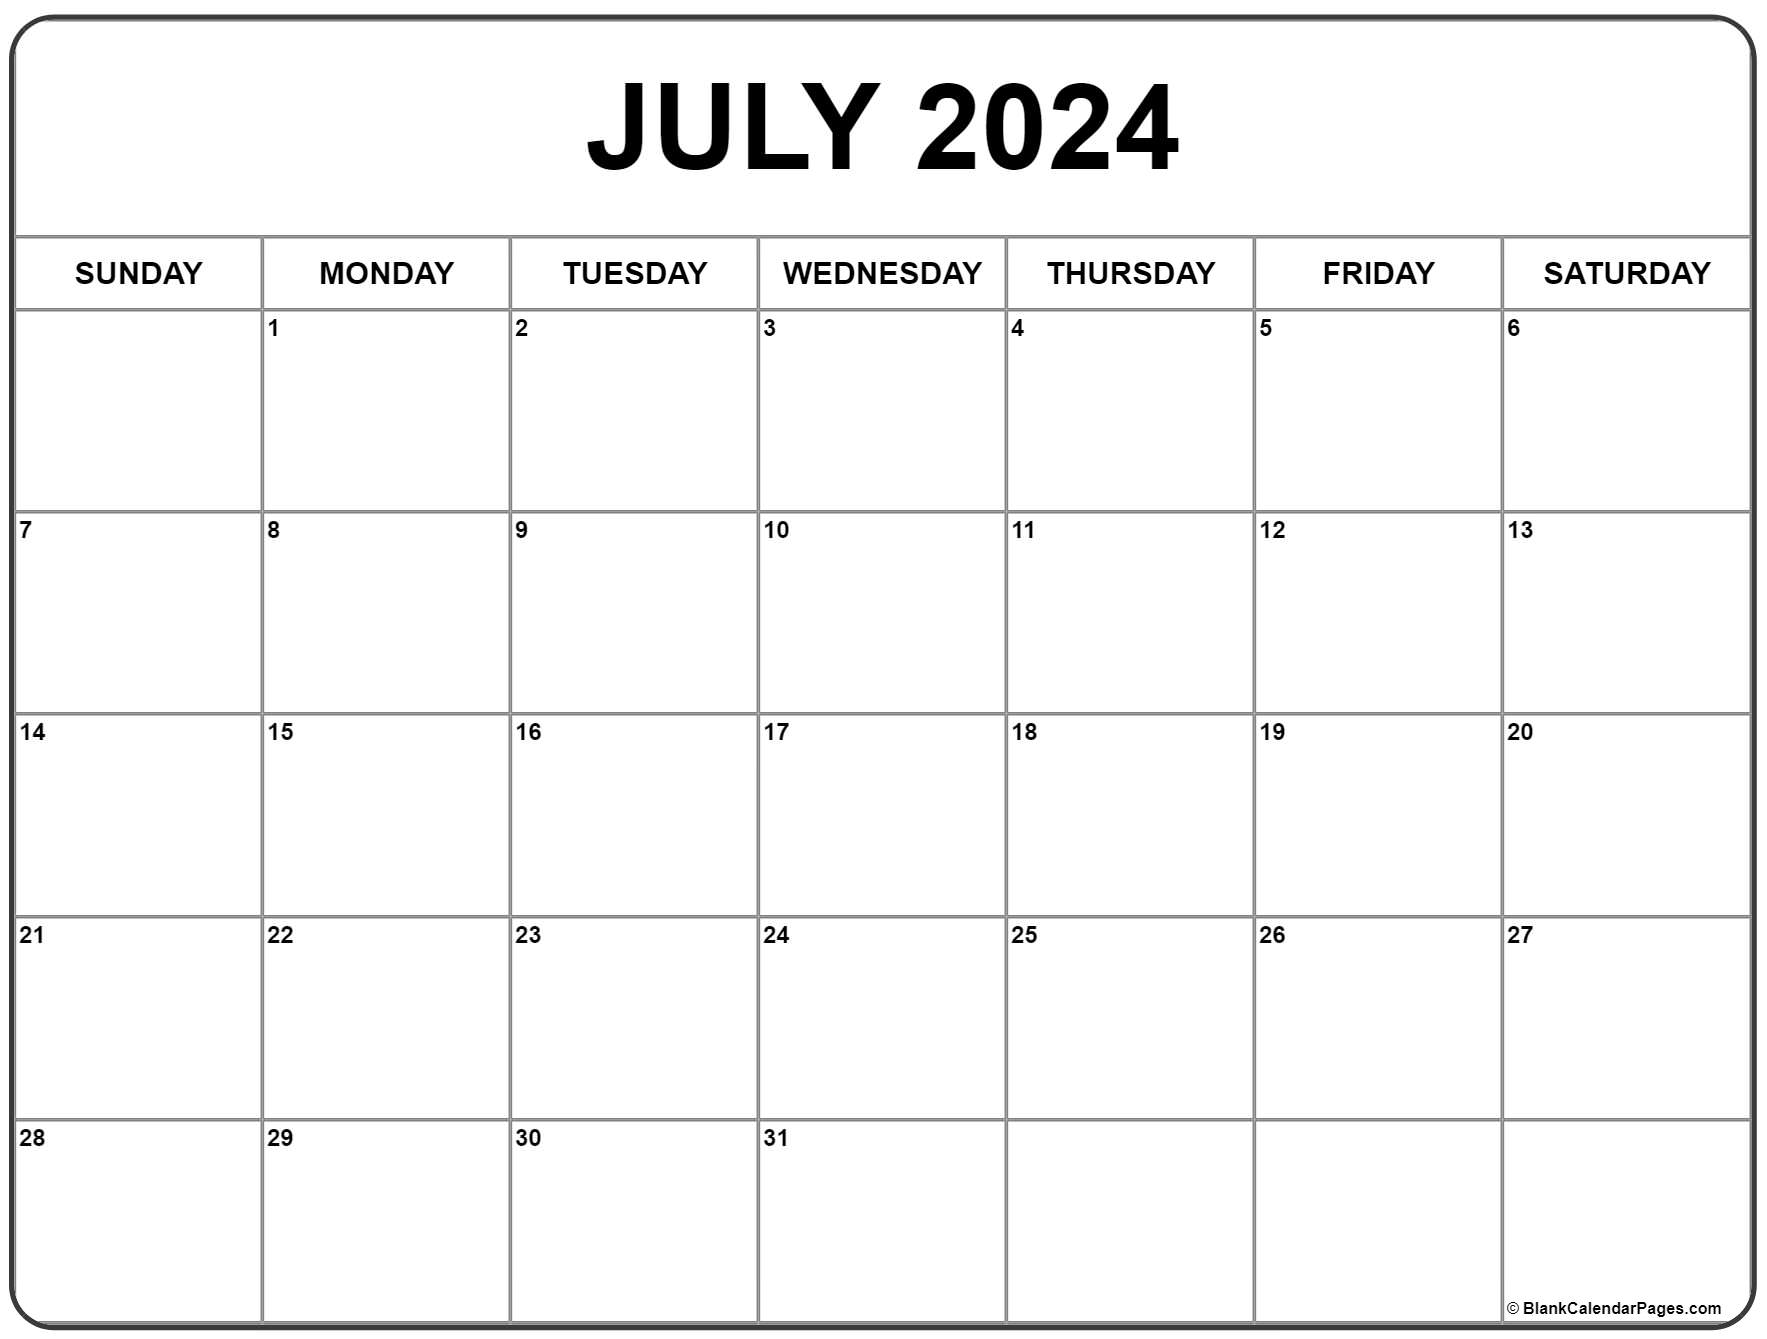 June 2024 Blank Calendar Pdf Betta Charlot